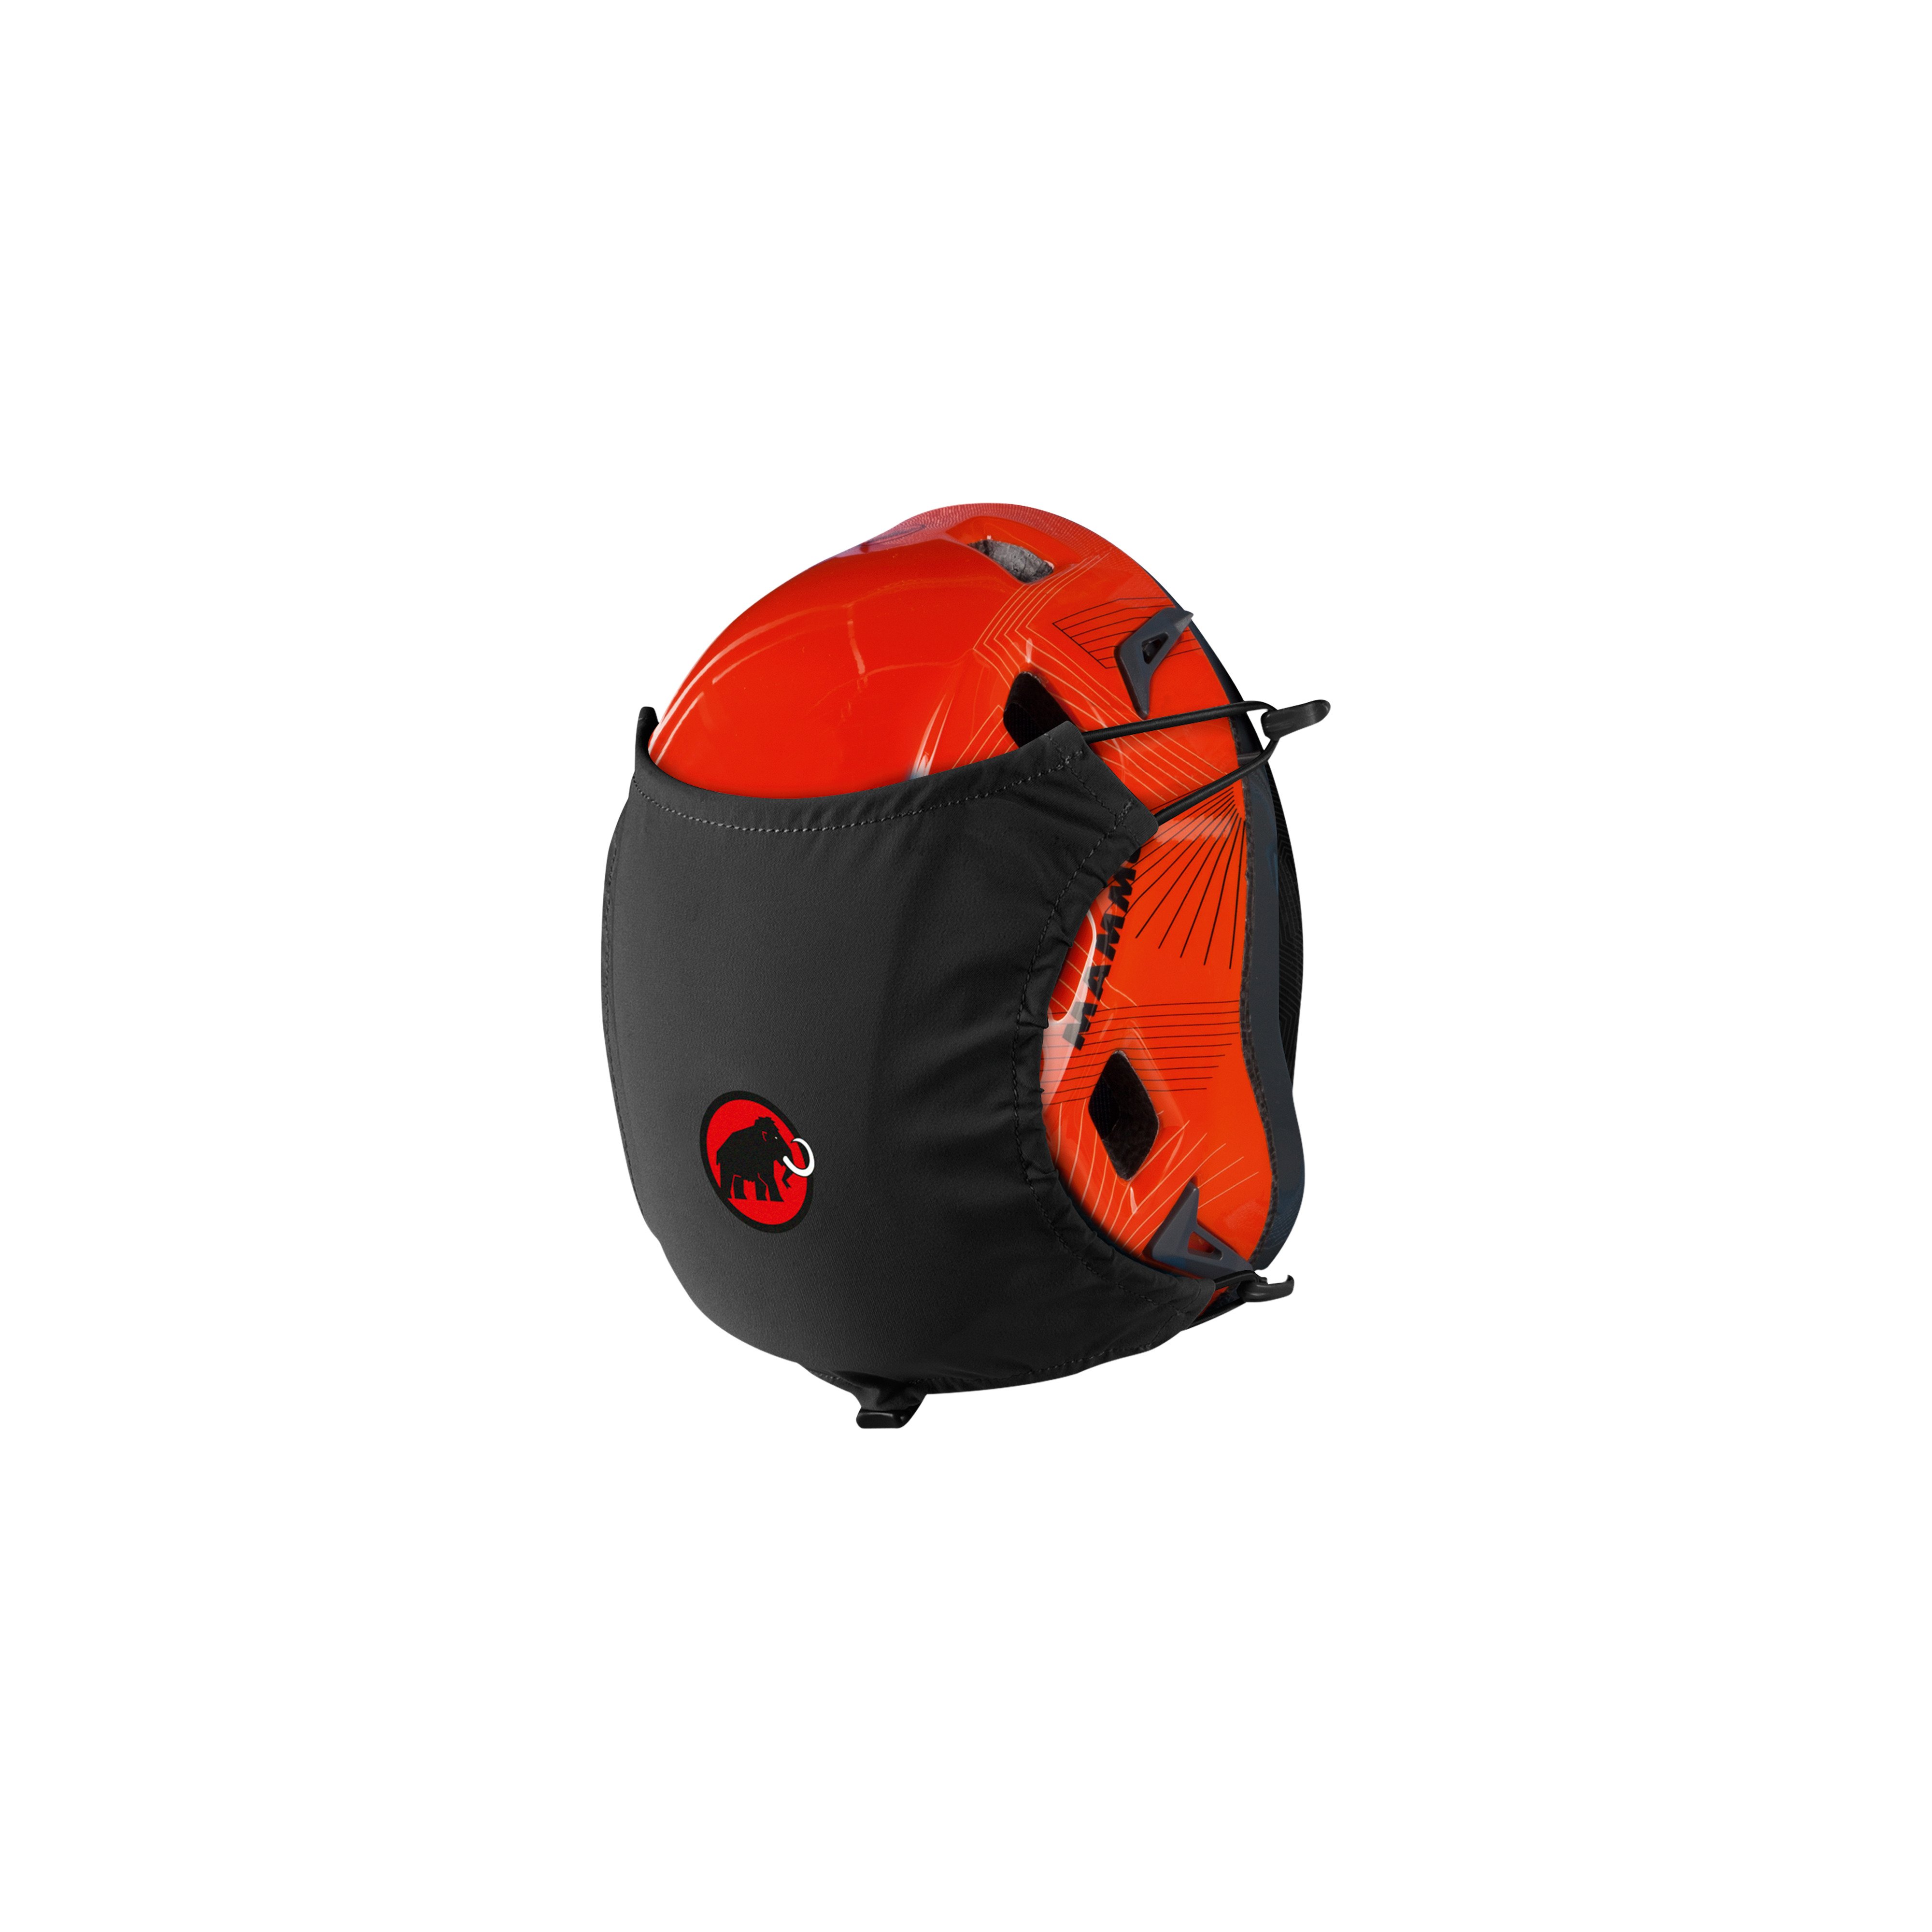 Helmet Holder - black, one size product image